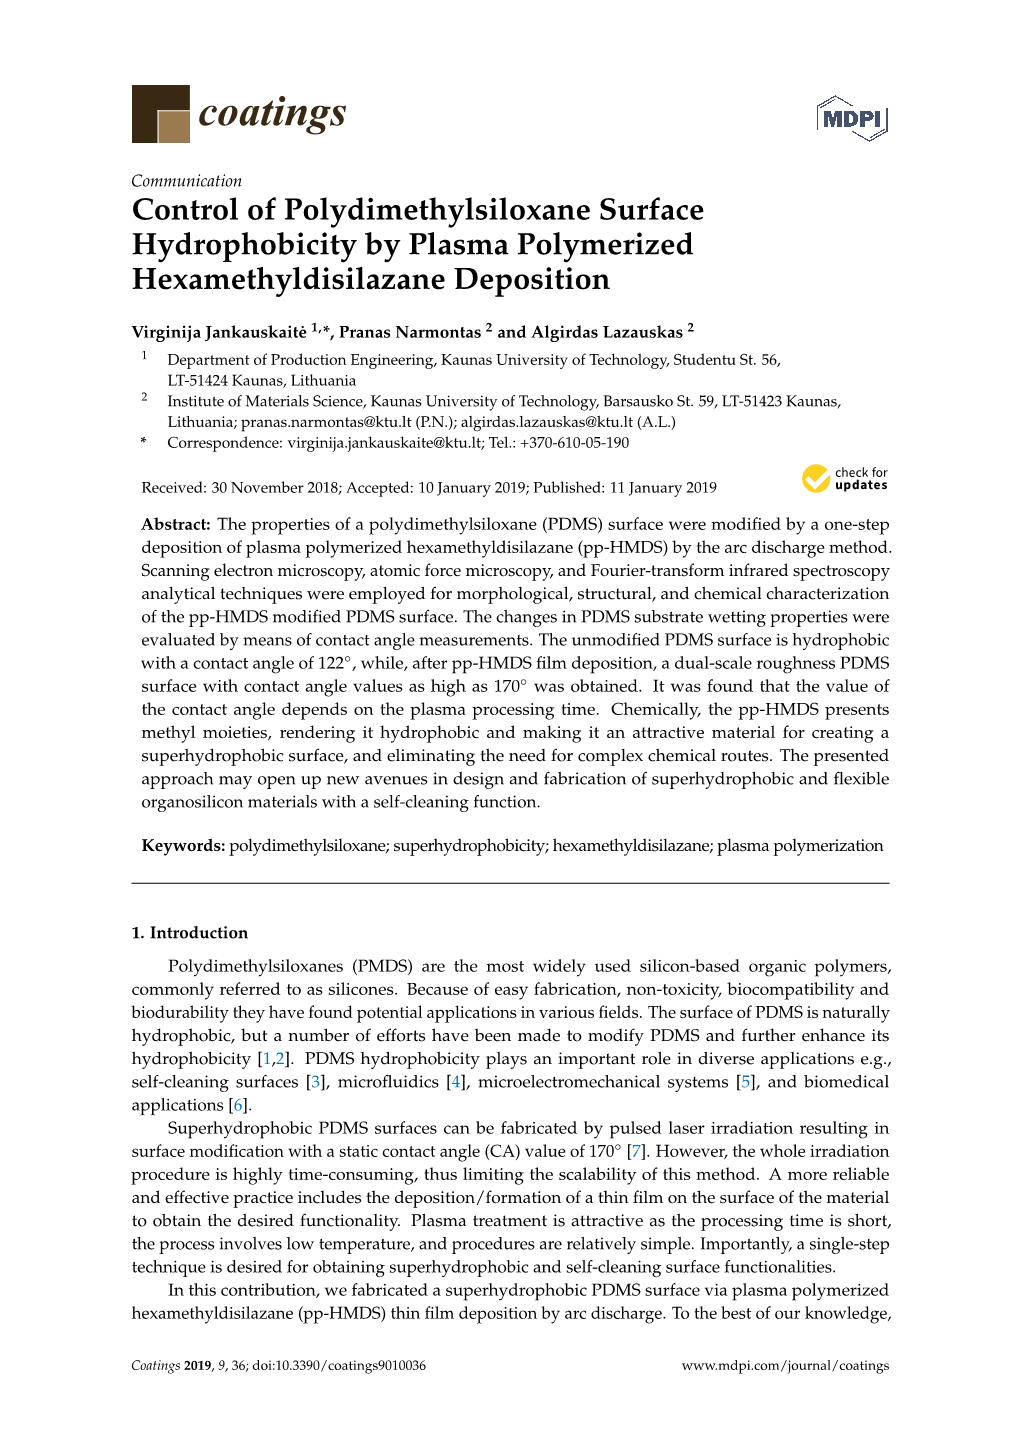 Control of Polydimethylsiloxane Surface Hydrophobicity by Plasma Polymerized Hexamethyldisilazane Deposition